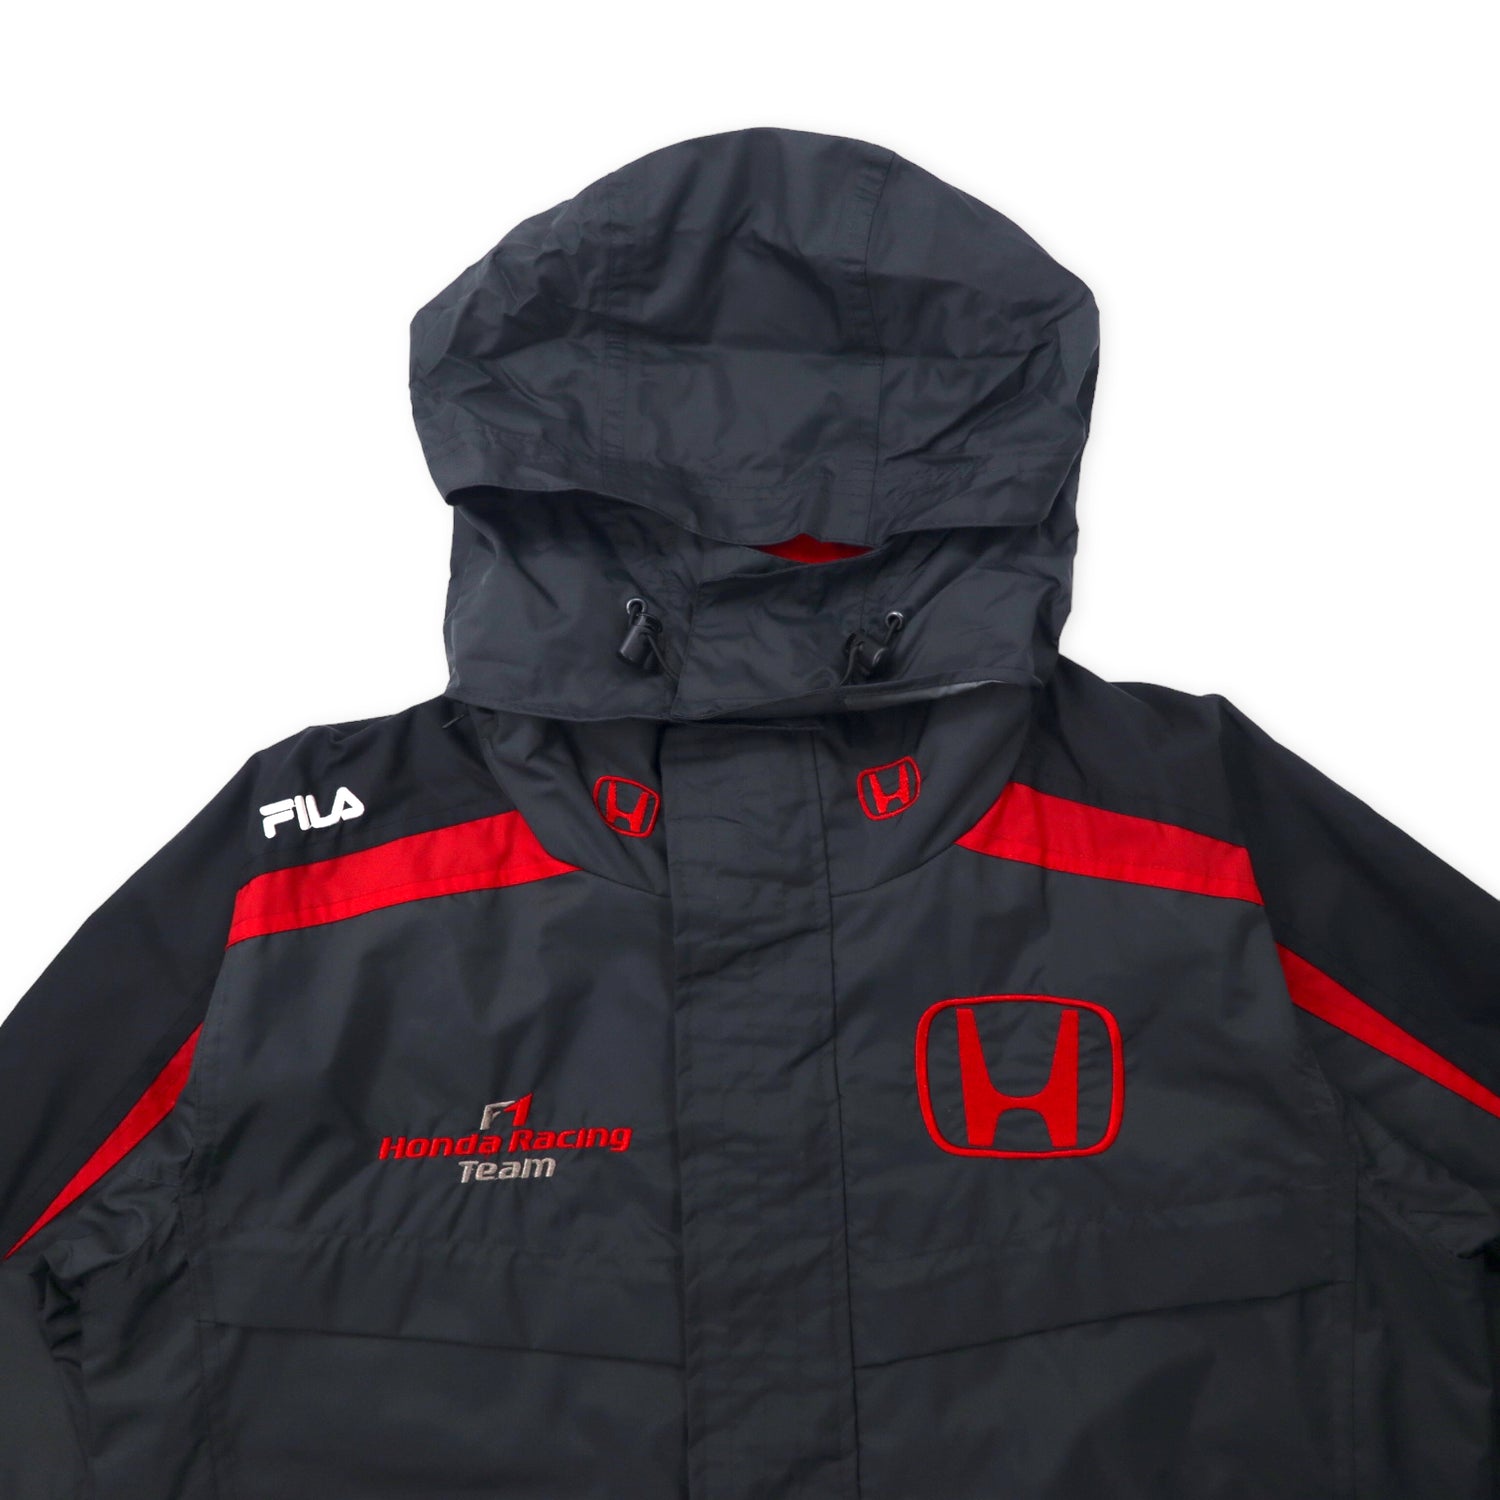 FILA レーシングジャケット ナイロンジャケット L グレー Honda Racing Team ロゴ刺繍 フード収納式 – 日本然リトテ